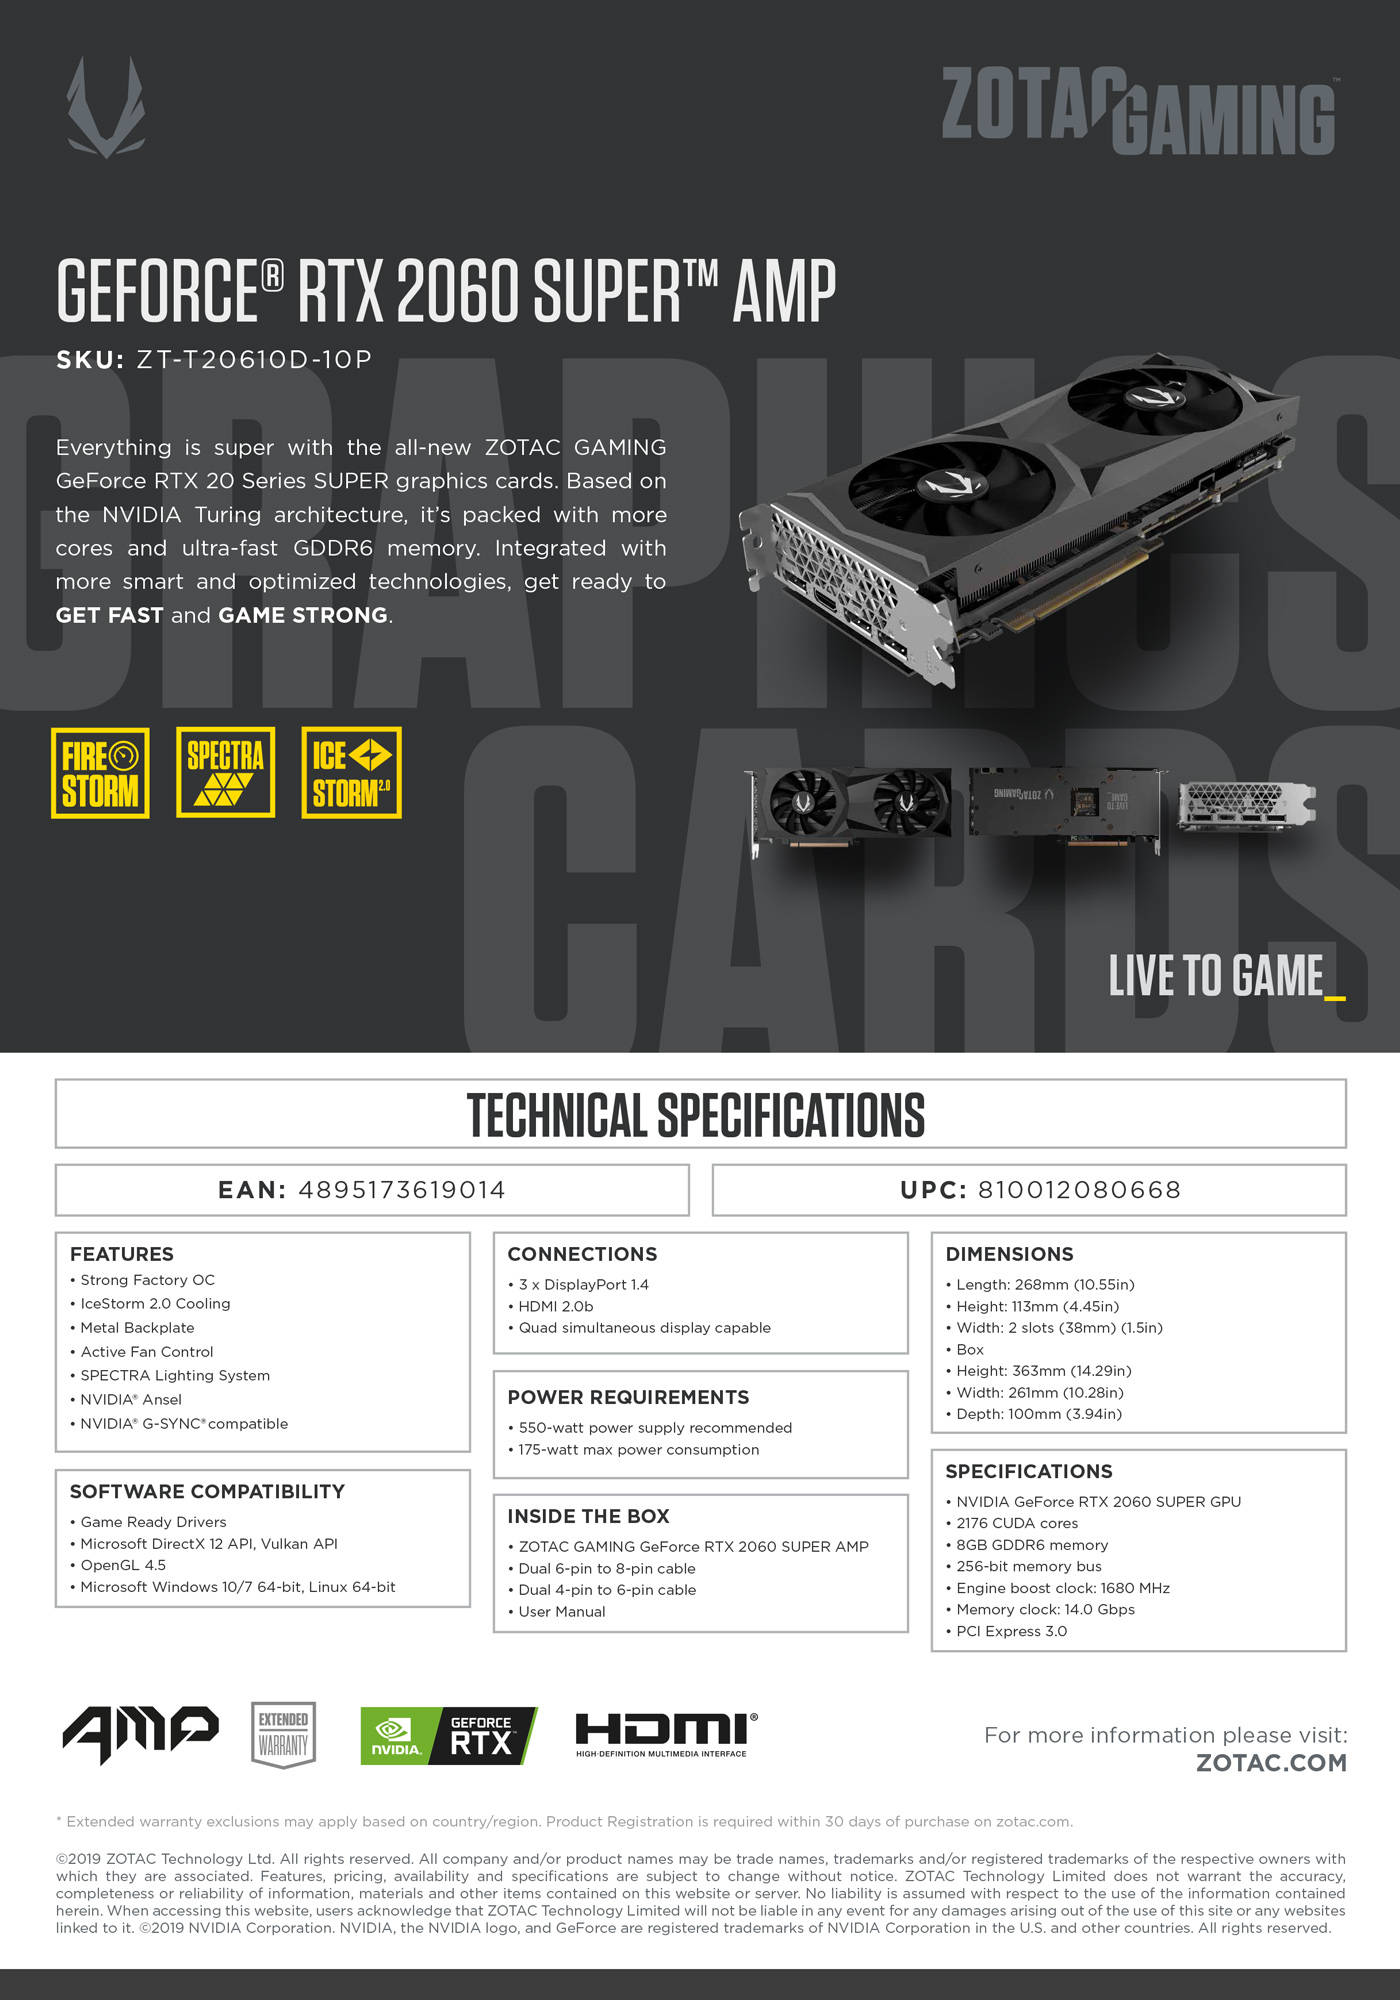 Buy Online Zotac Gaming GeForce RTX 2060 Super AMP 8GB GDDR6 (ZT-T20610D-10P)